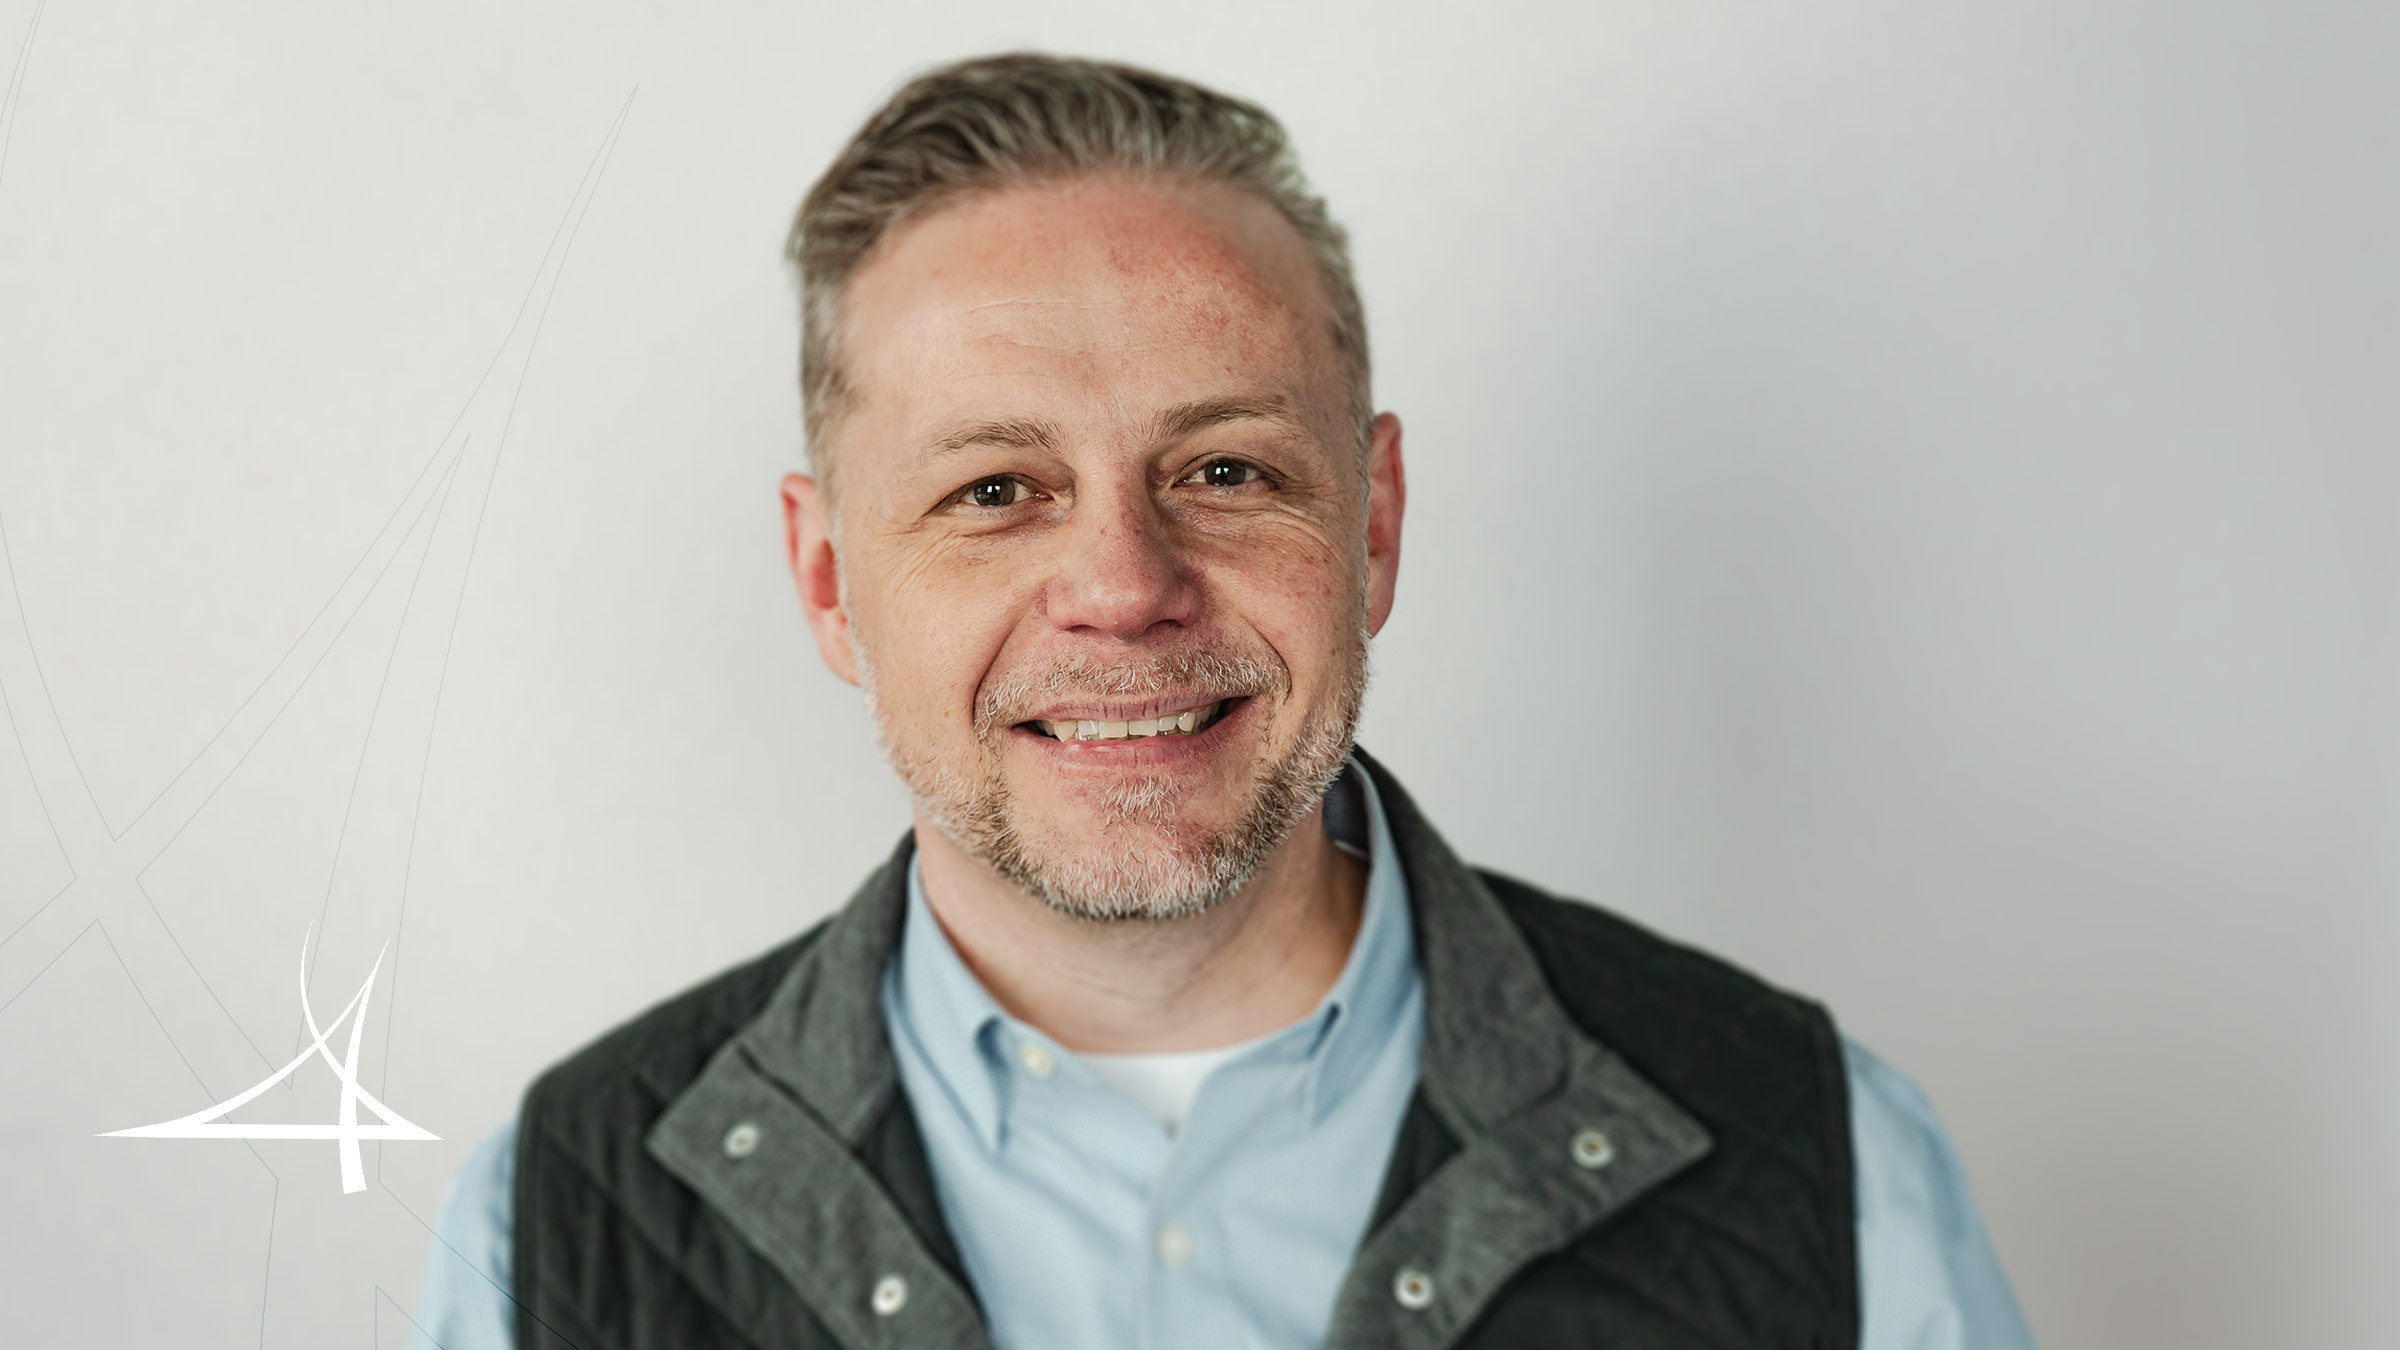 OneBridge Employee Spotlight: Steve Heist, Vice President of Information Technology